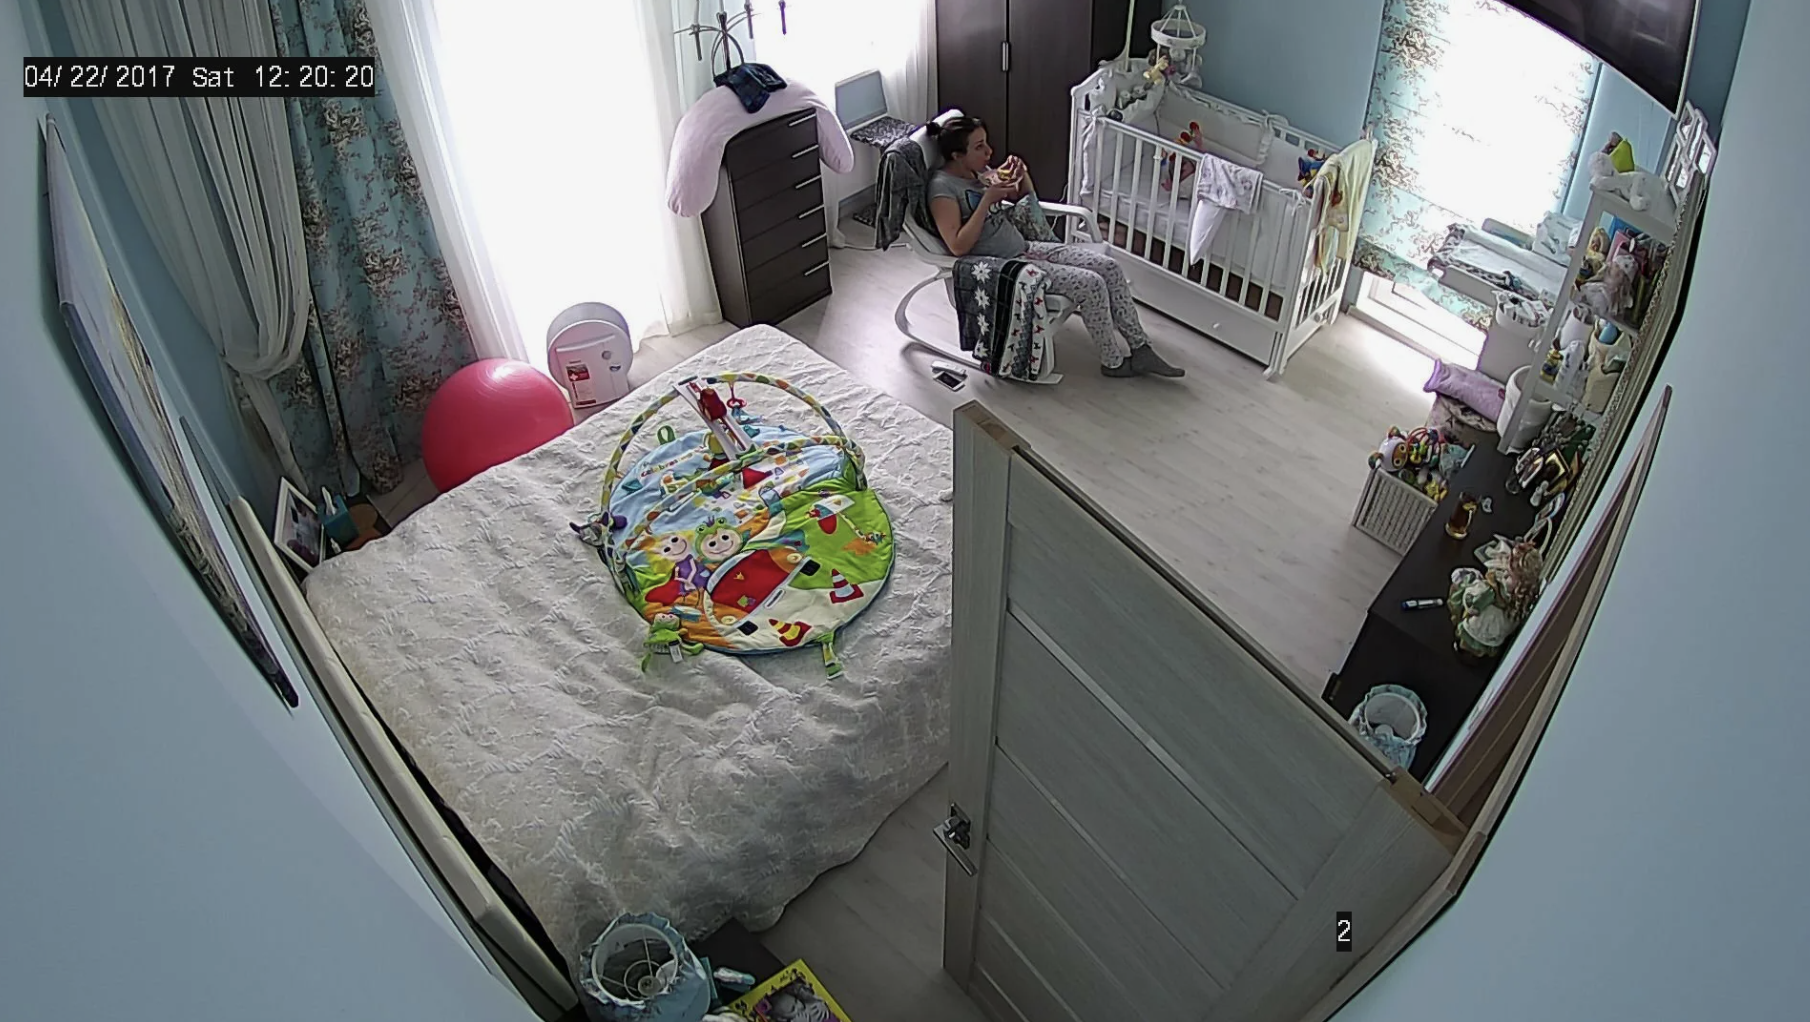 Surveillance camera in the children's room | Source: Shutterstock